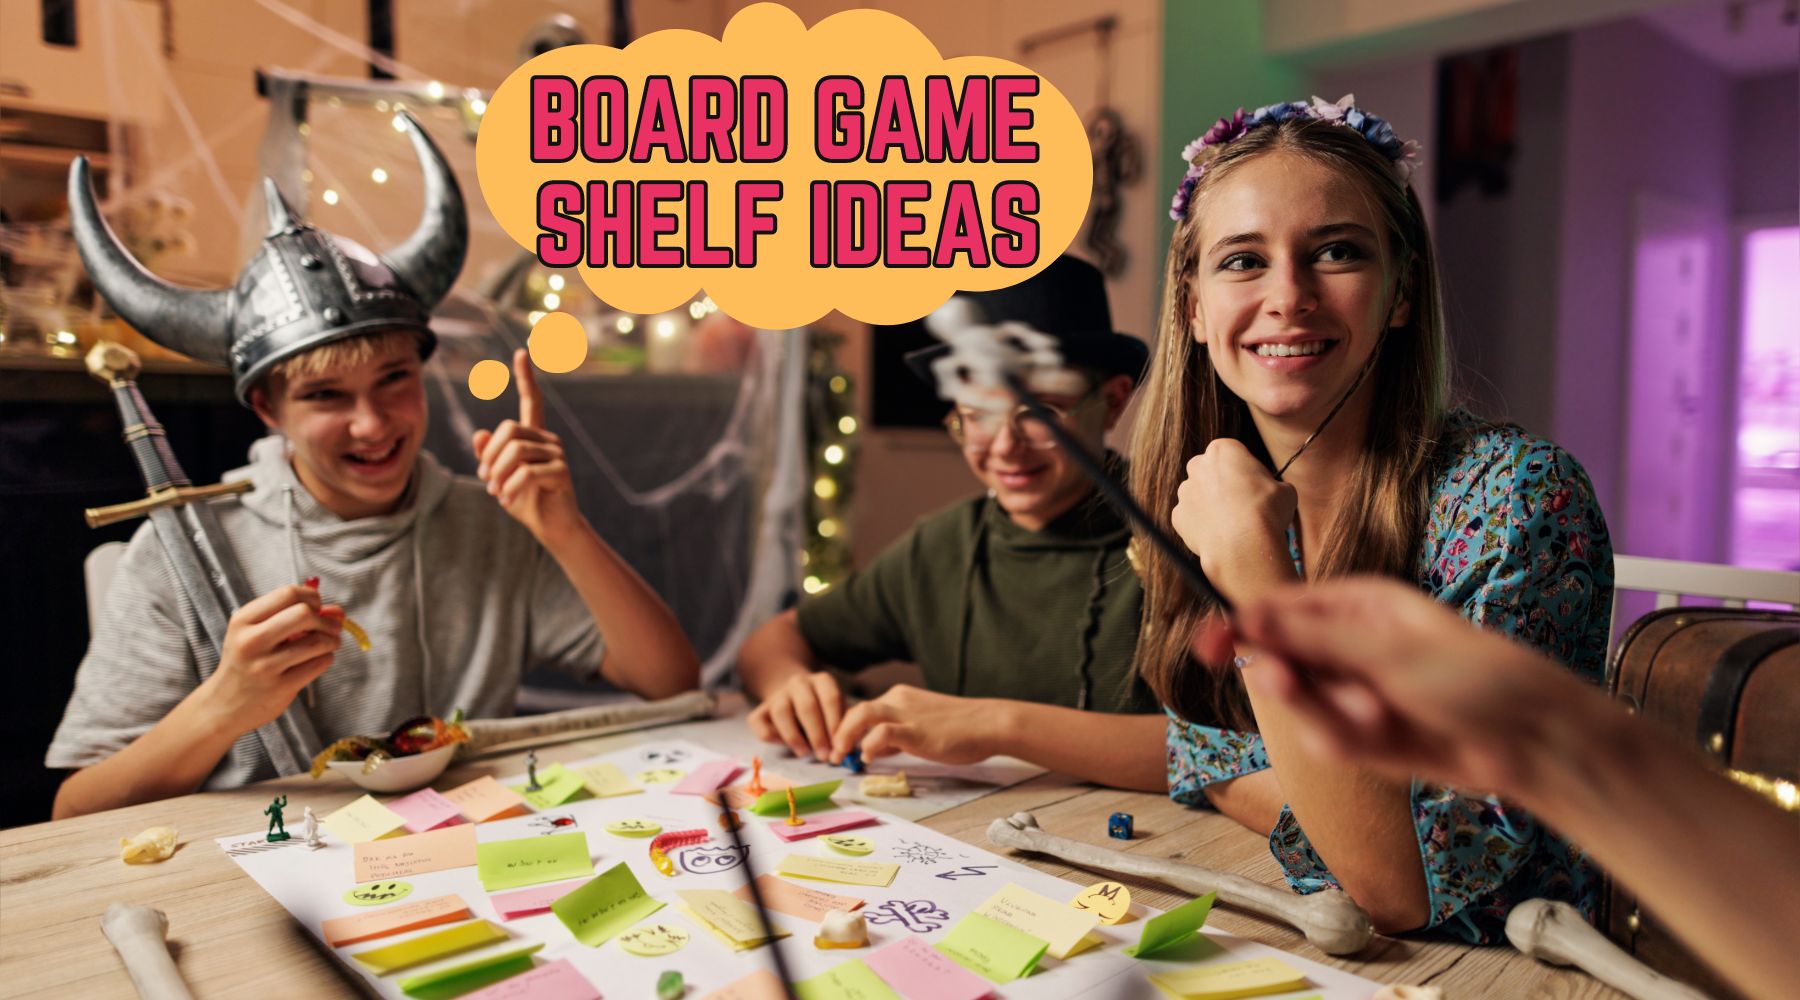 Board Game Shelf Ideas to Create a Master Game Room - Bookshelf Memories